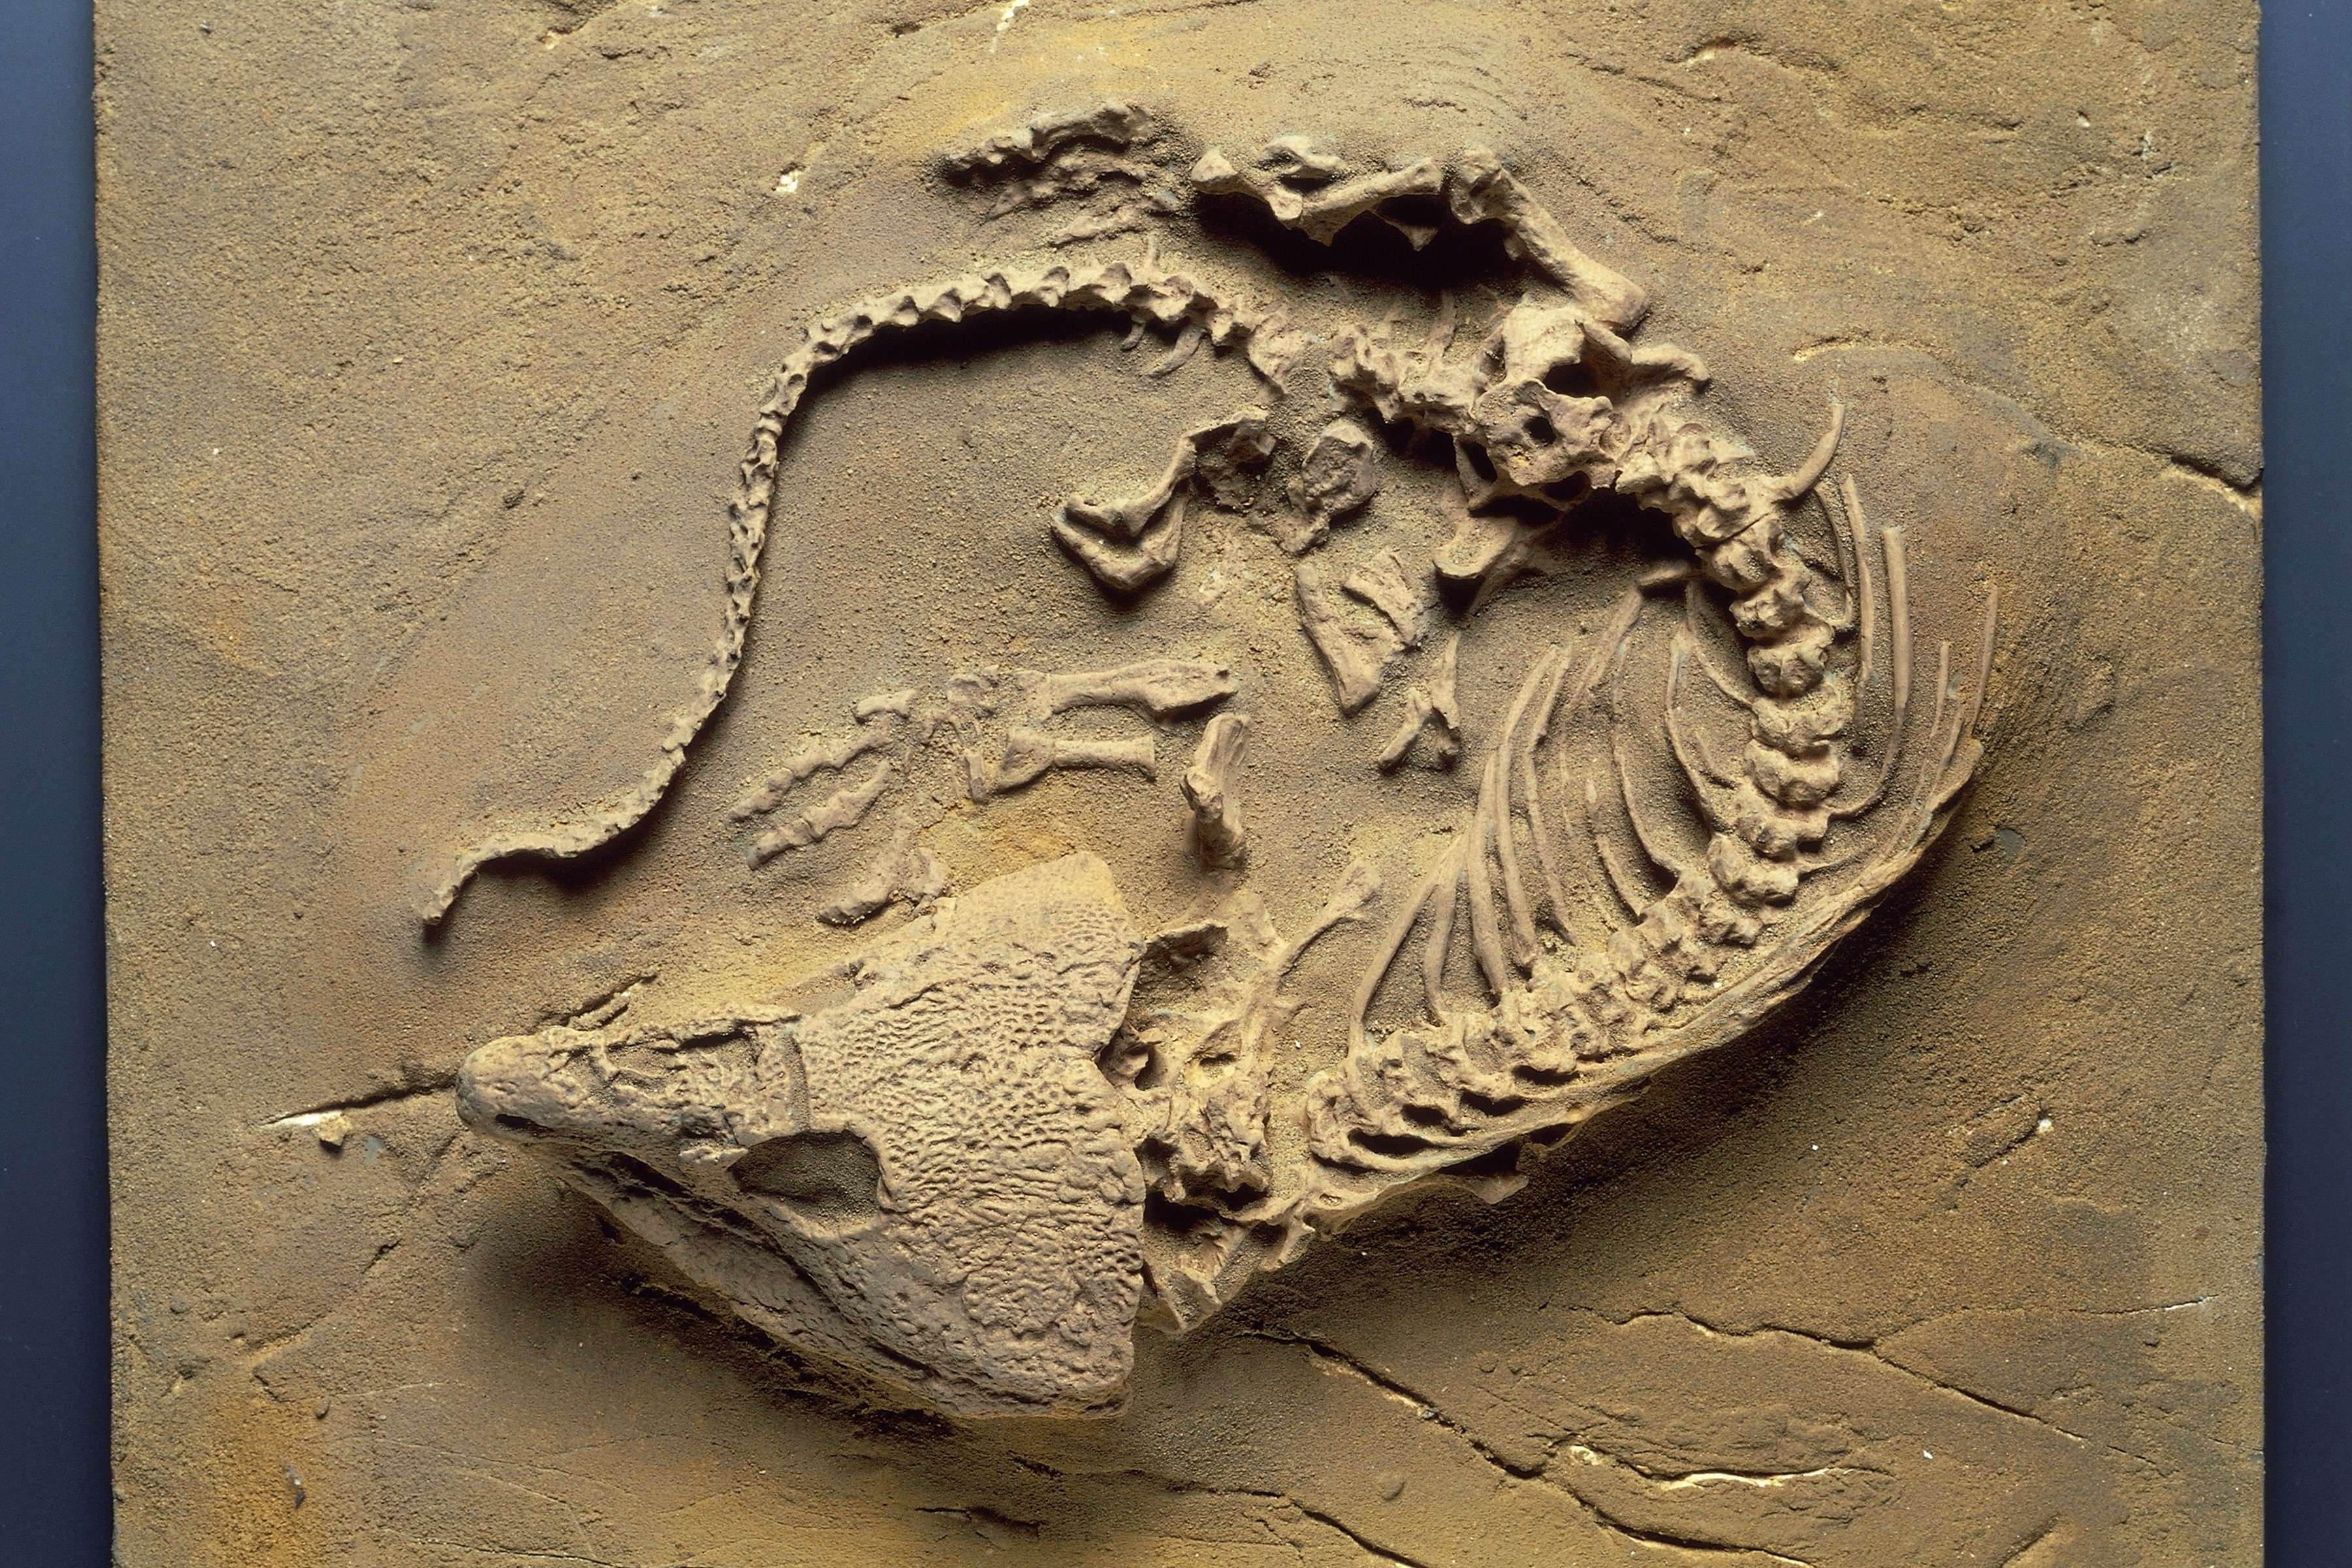 Labidosaurus hamatus fossil